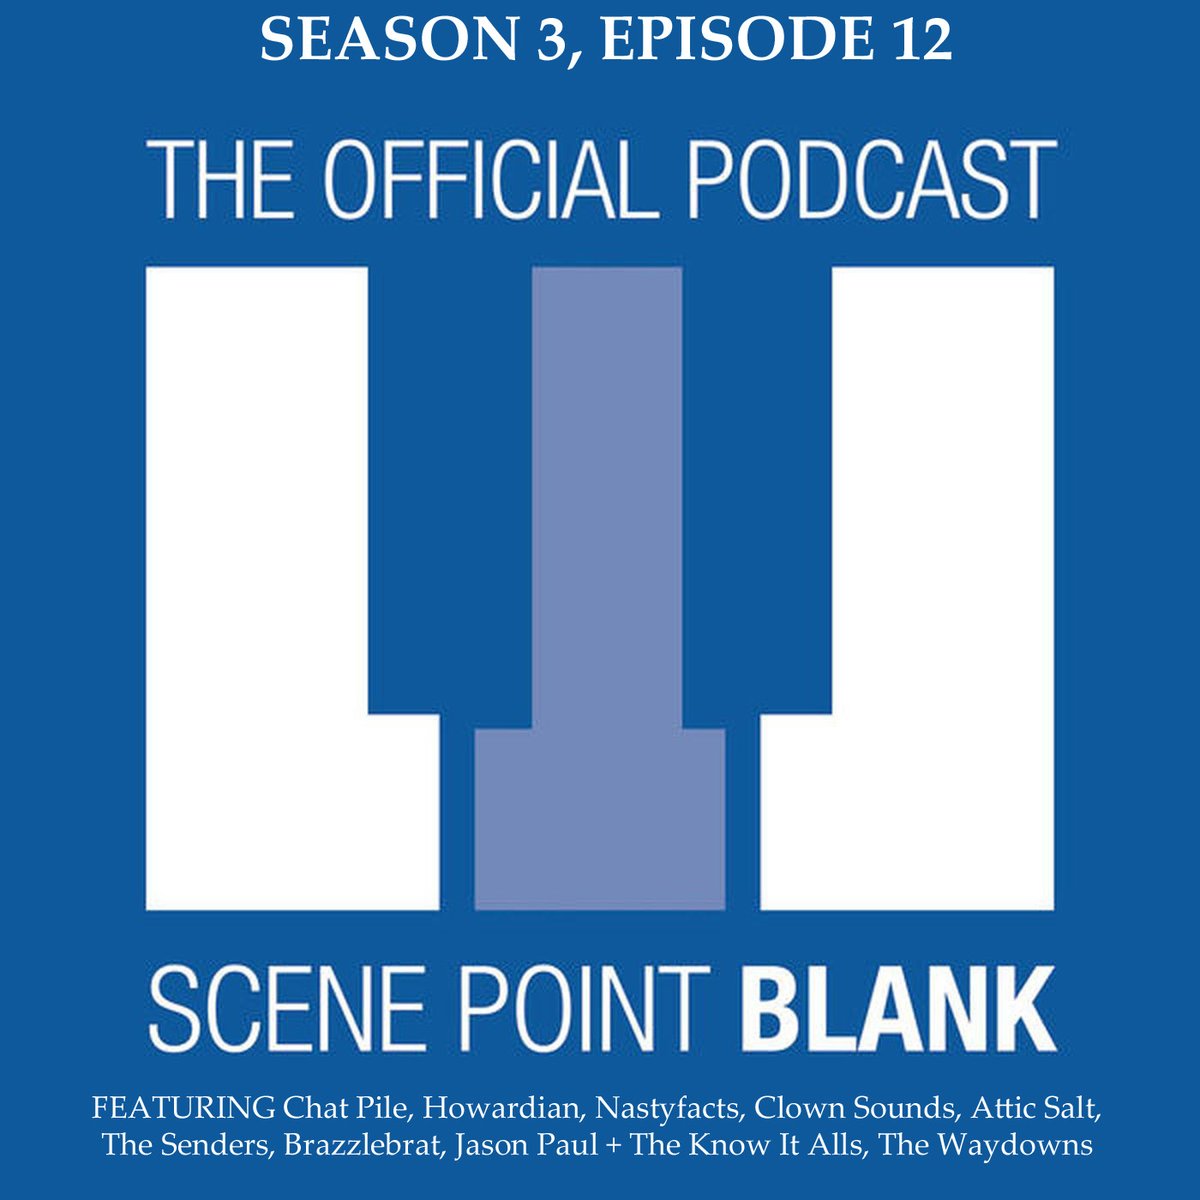 Listen here scenepointblank.com/podcast/season…